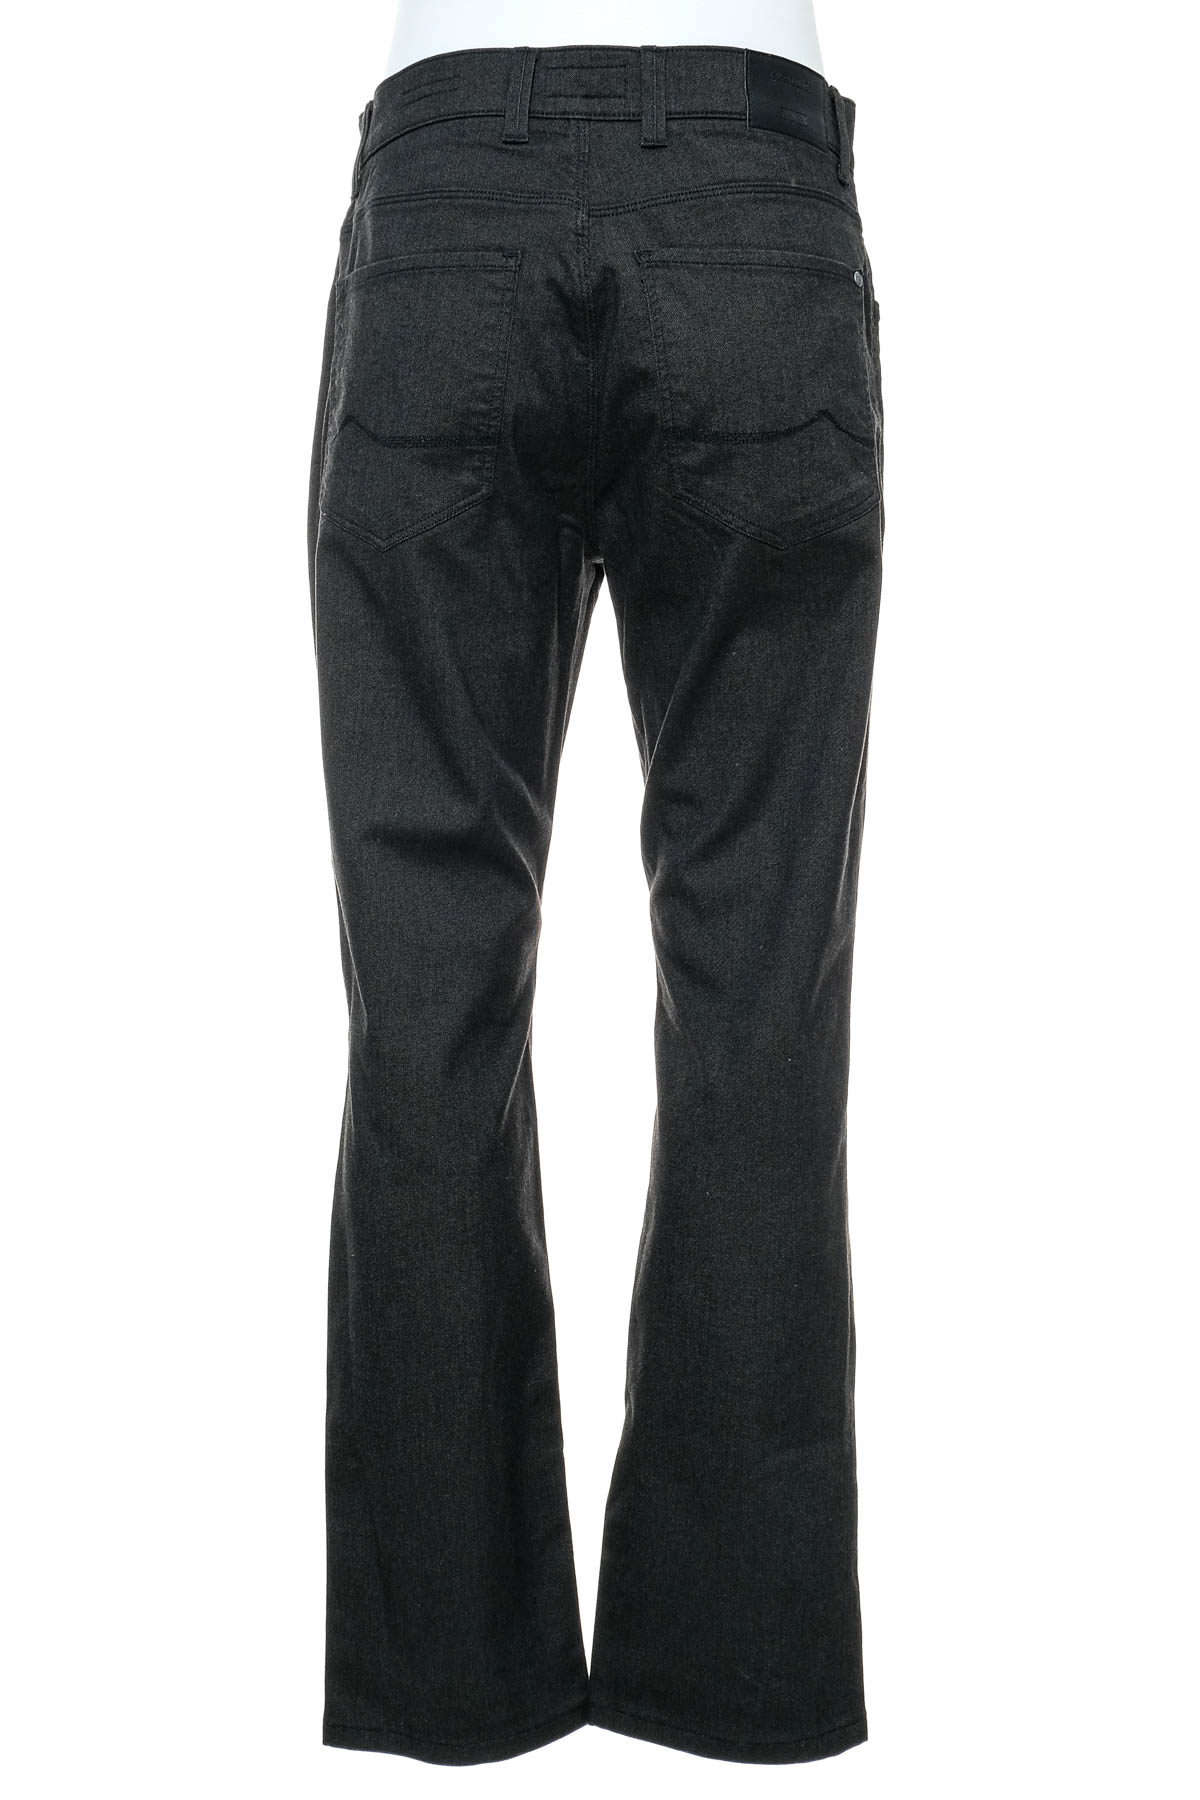 Pantalon pentru bărbați - Pioneer - 1